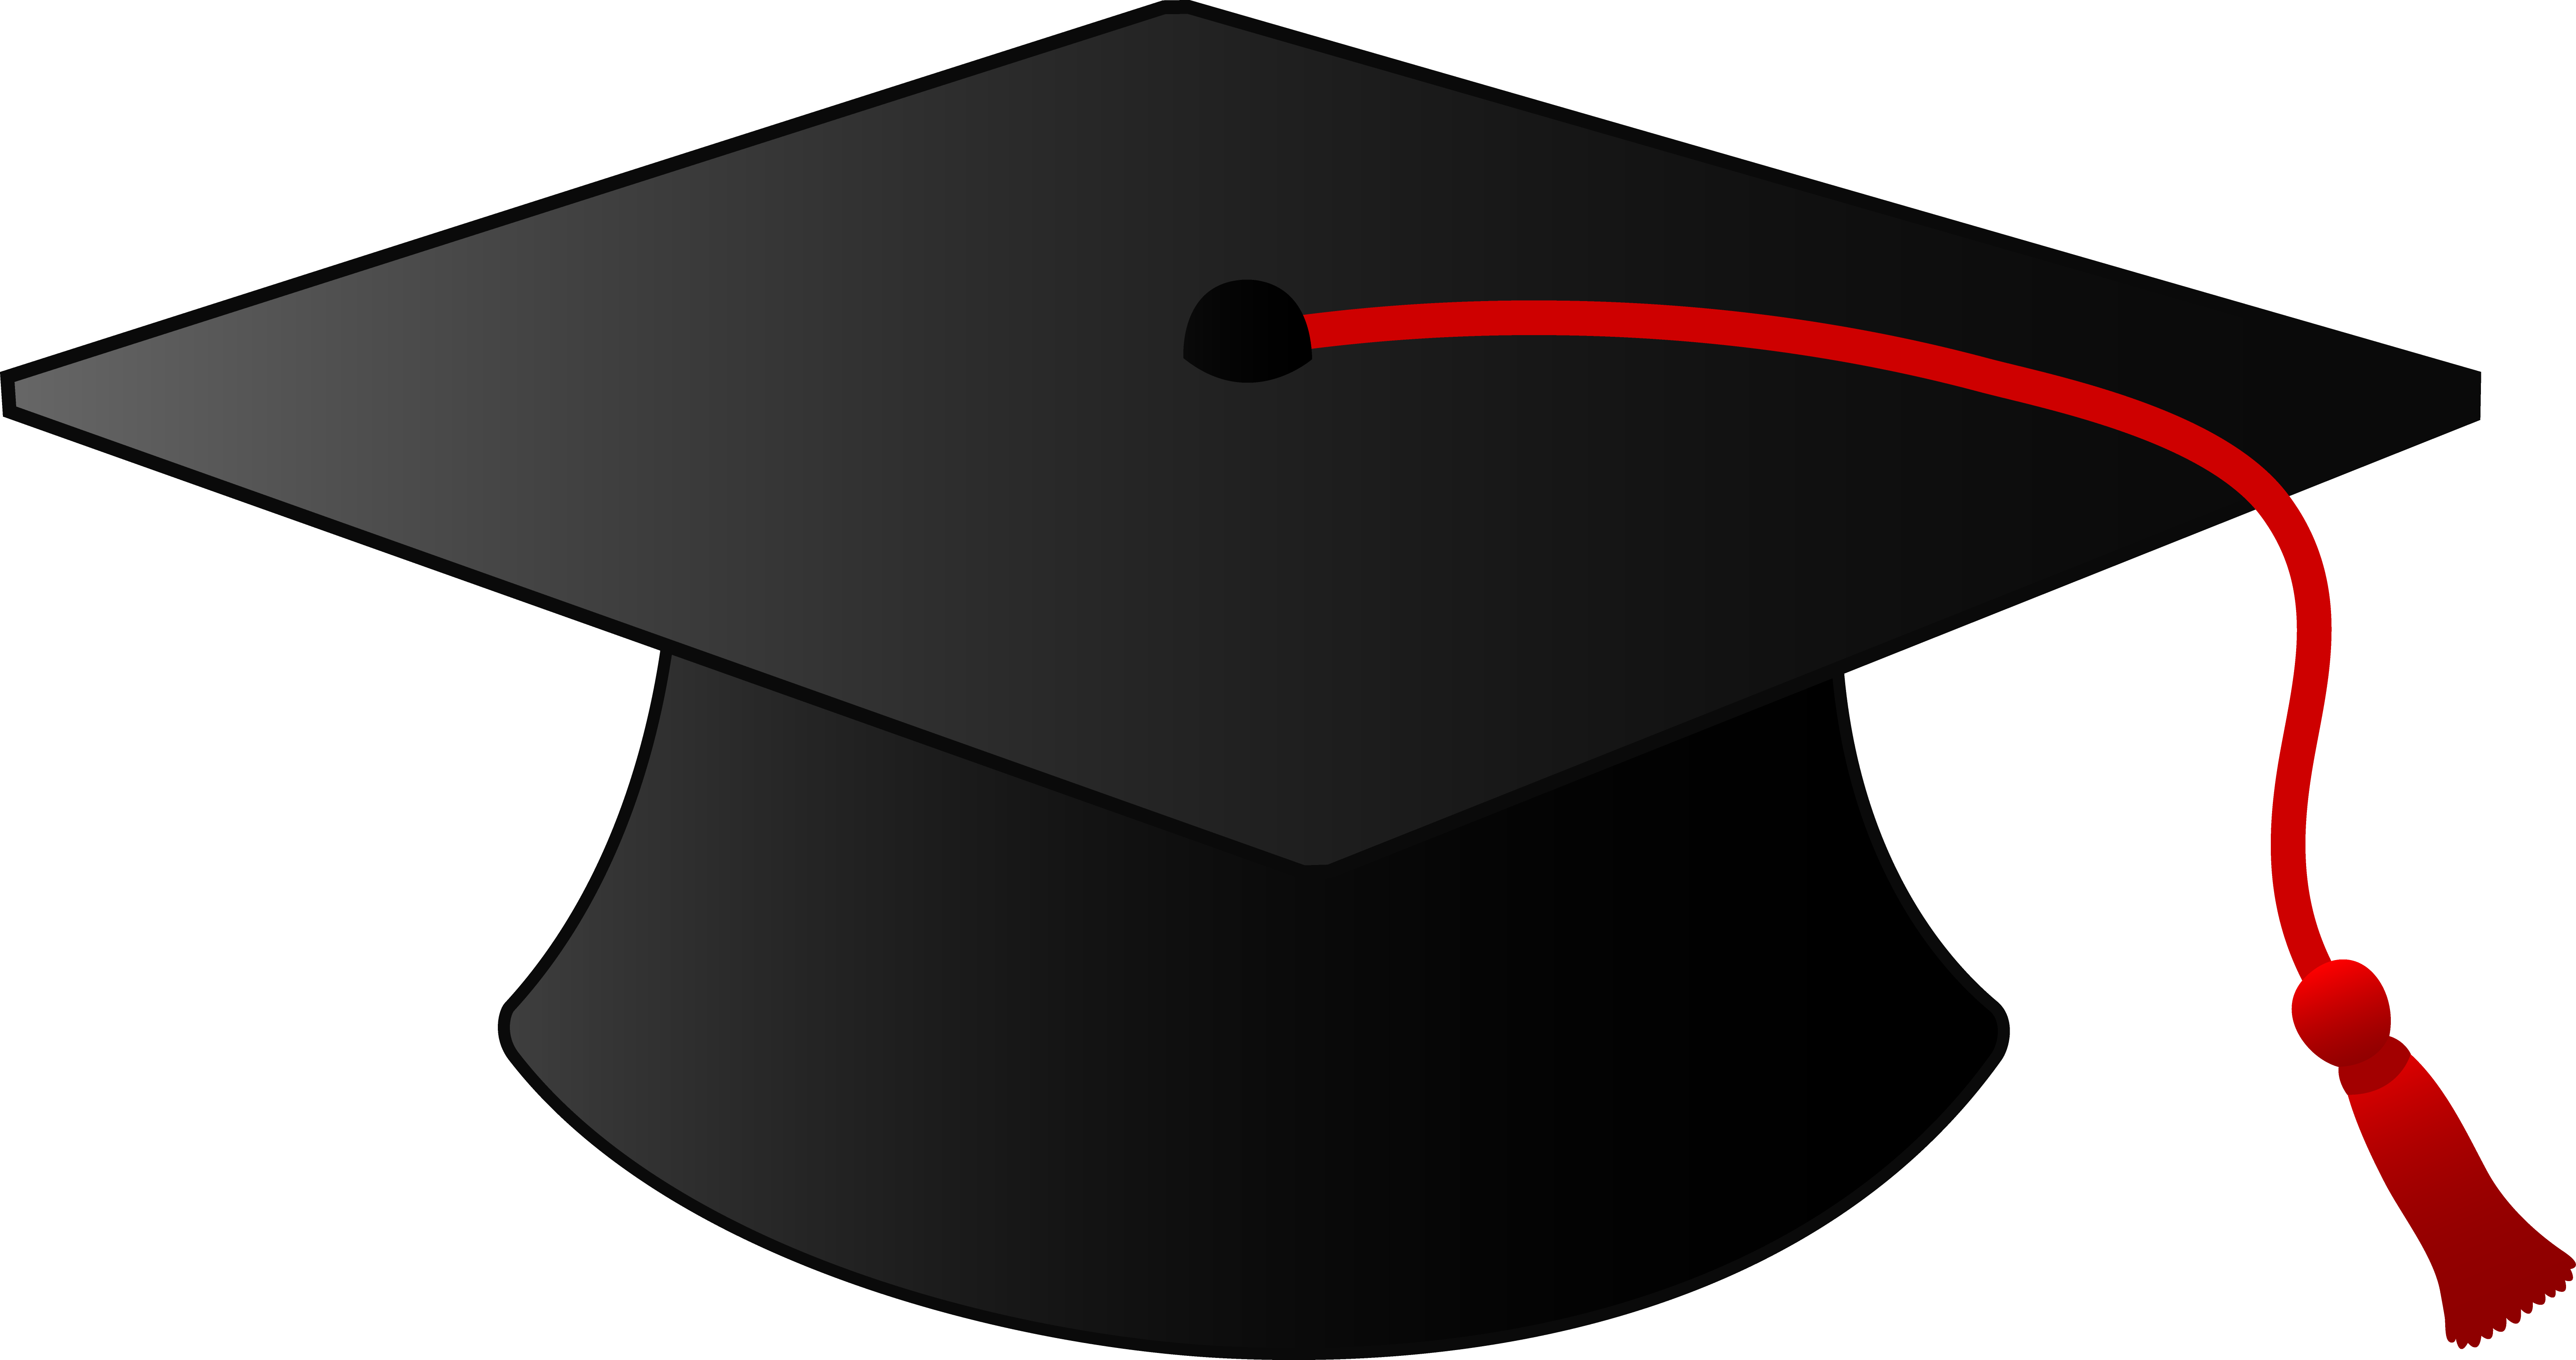 Graduation cap clipart images